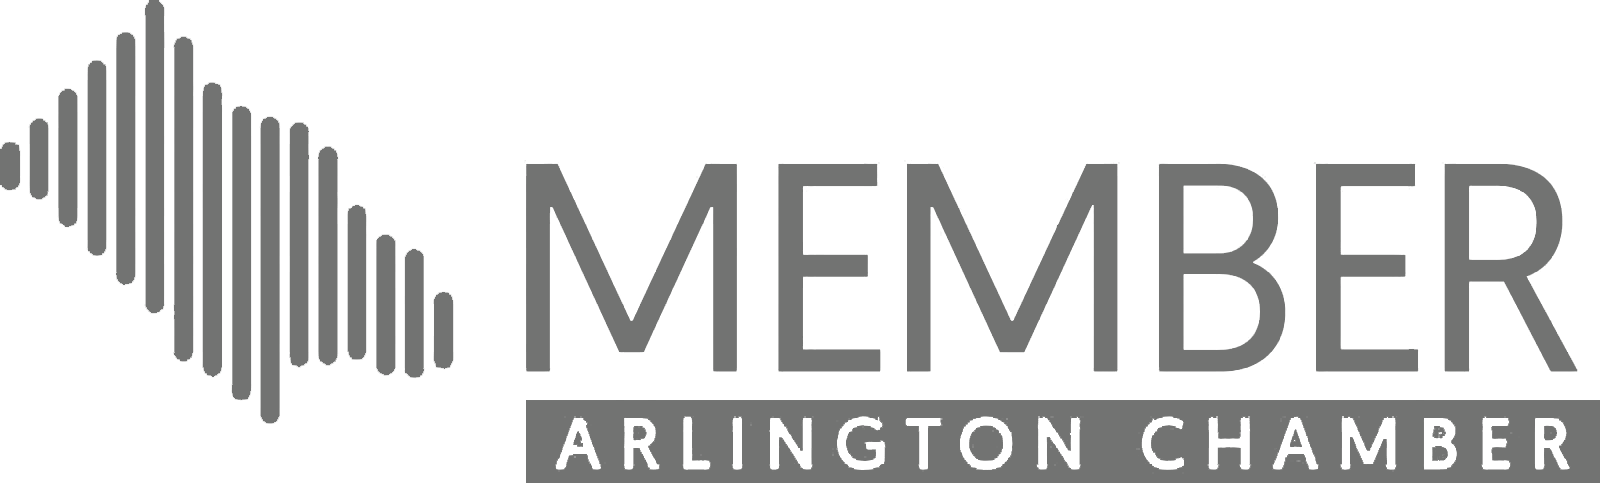 Arlington, VA Chamber of Commerce logo